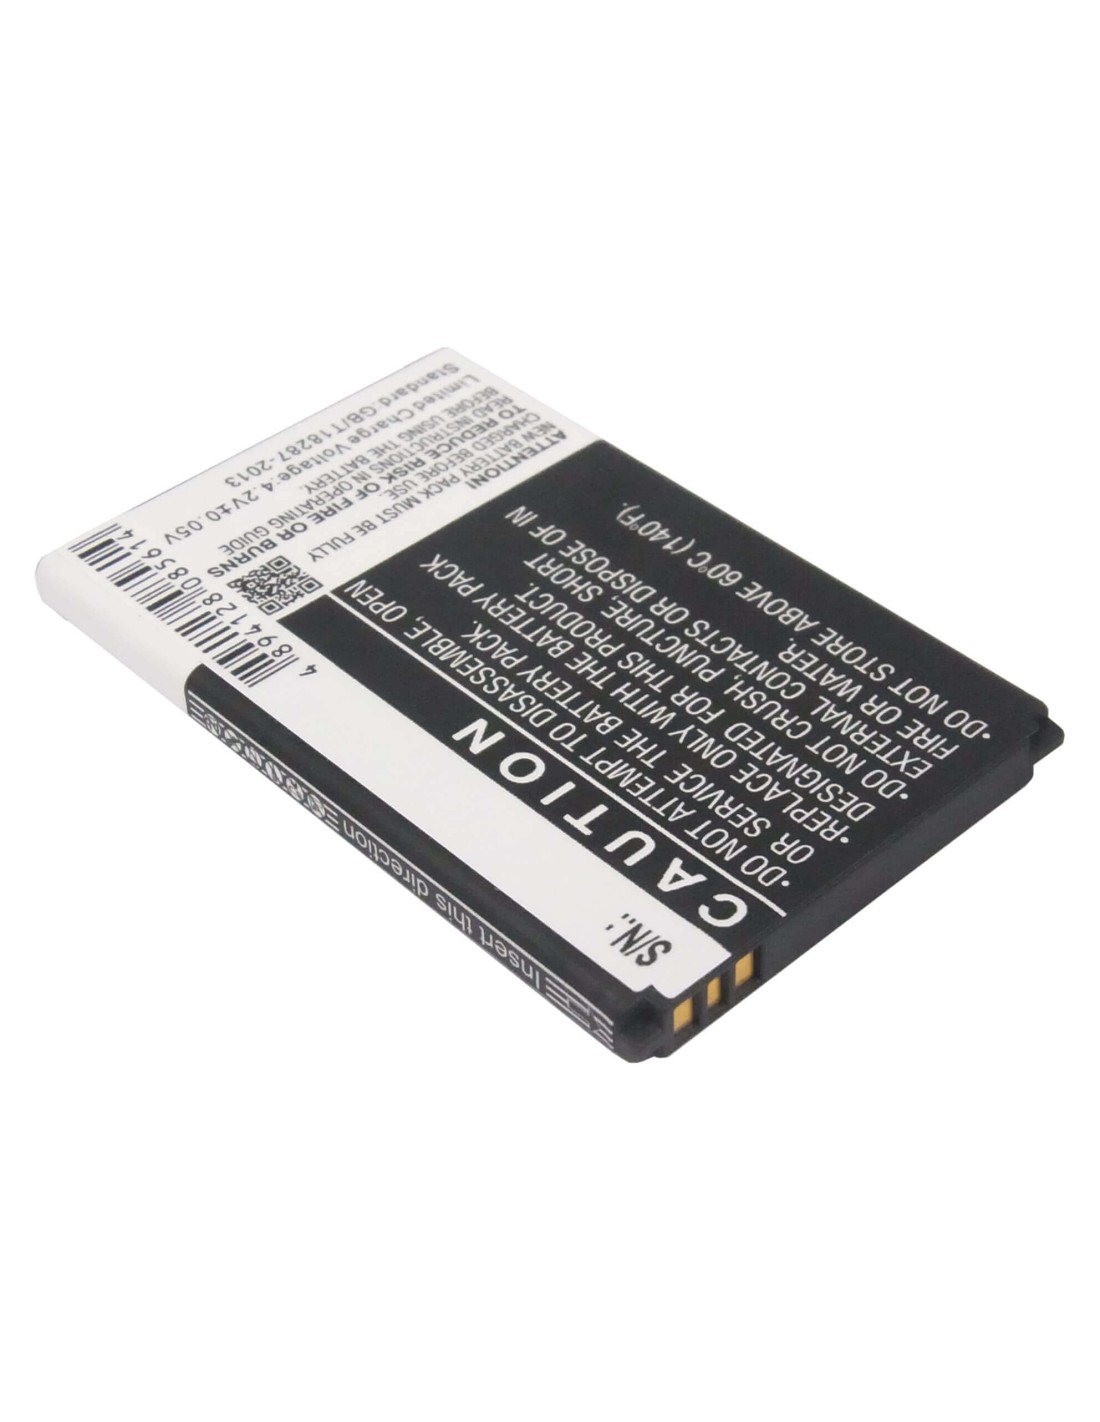 Battery for Huawei E5-0315, E50318, E5-0318 3.7V, 1500mAh - 5.55Wh